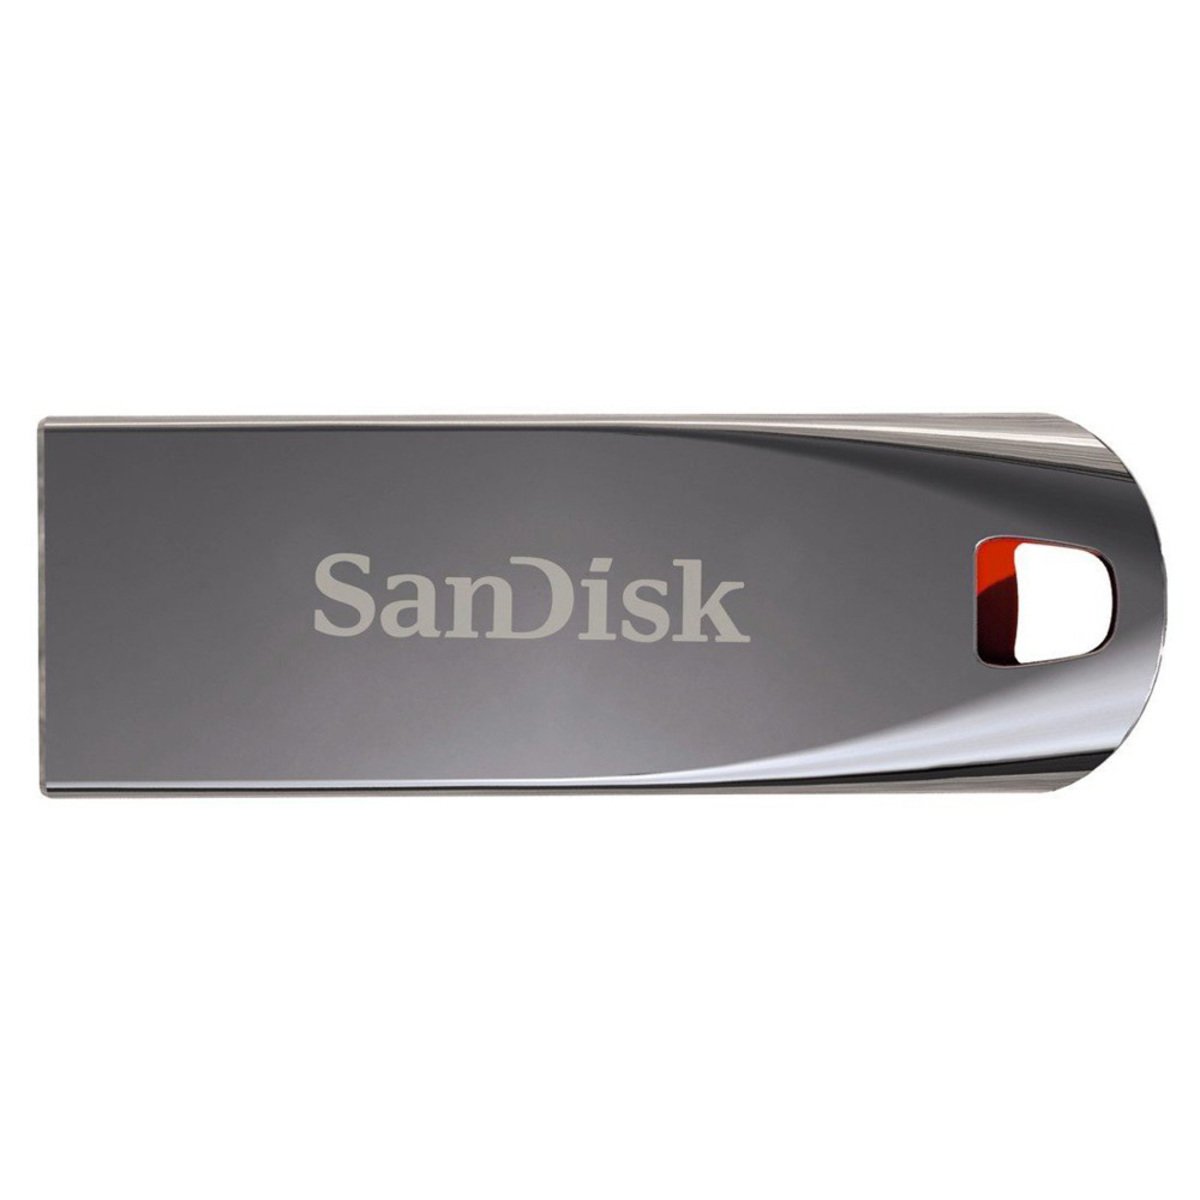 Sandisk FlashDrive CruzerForceSDCZ71 32GB